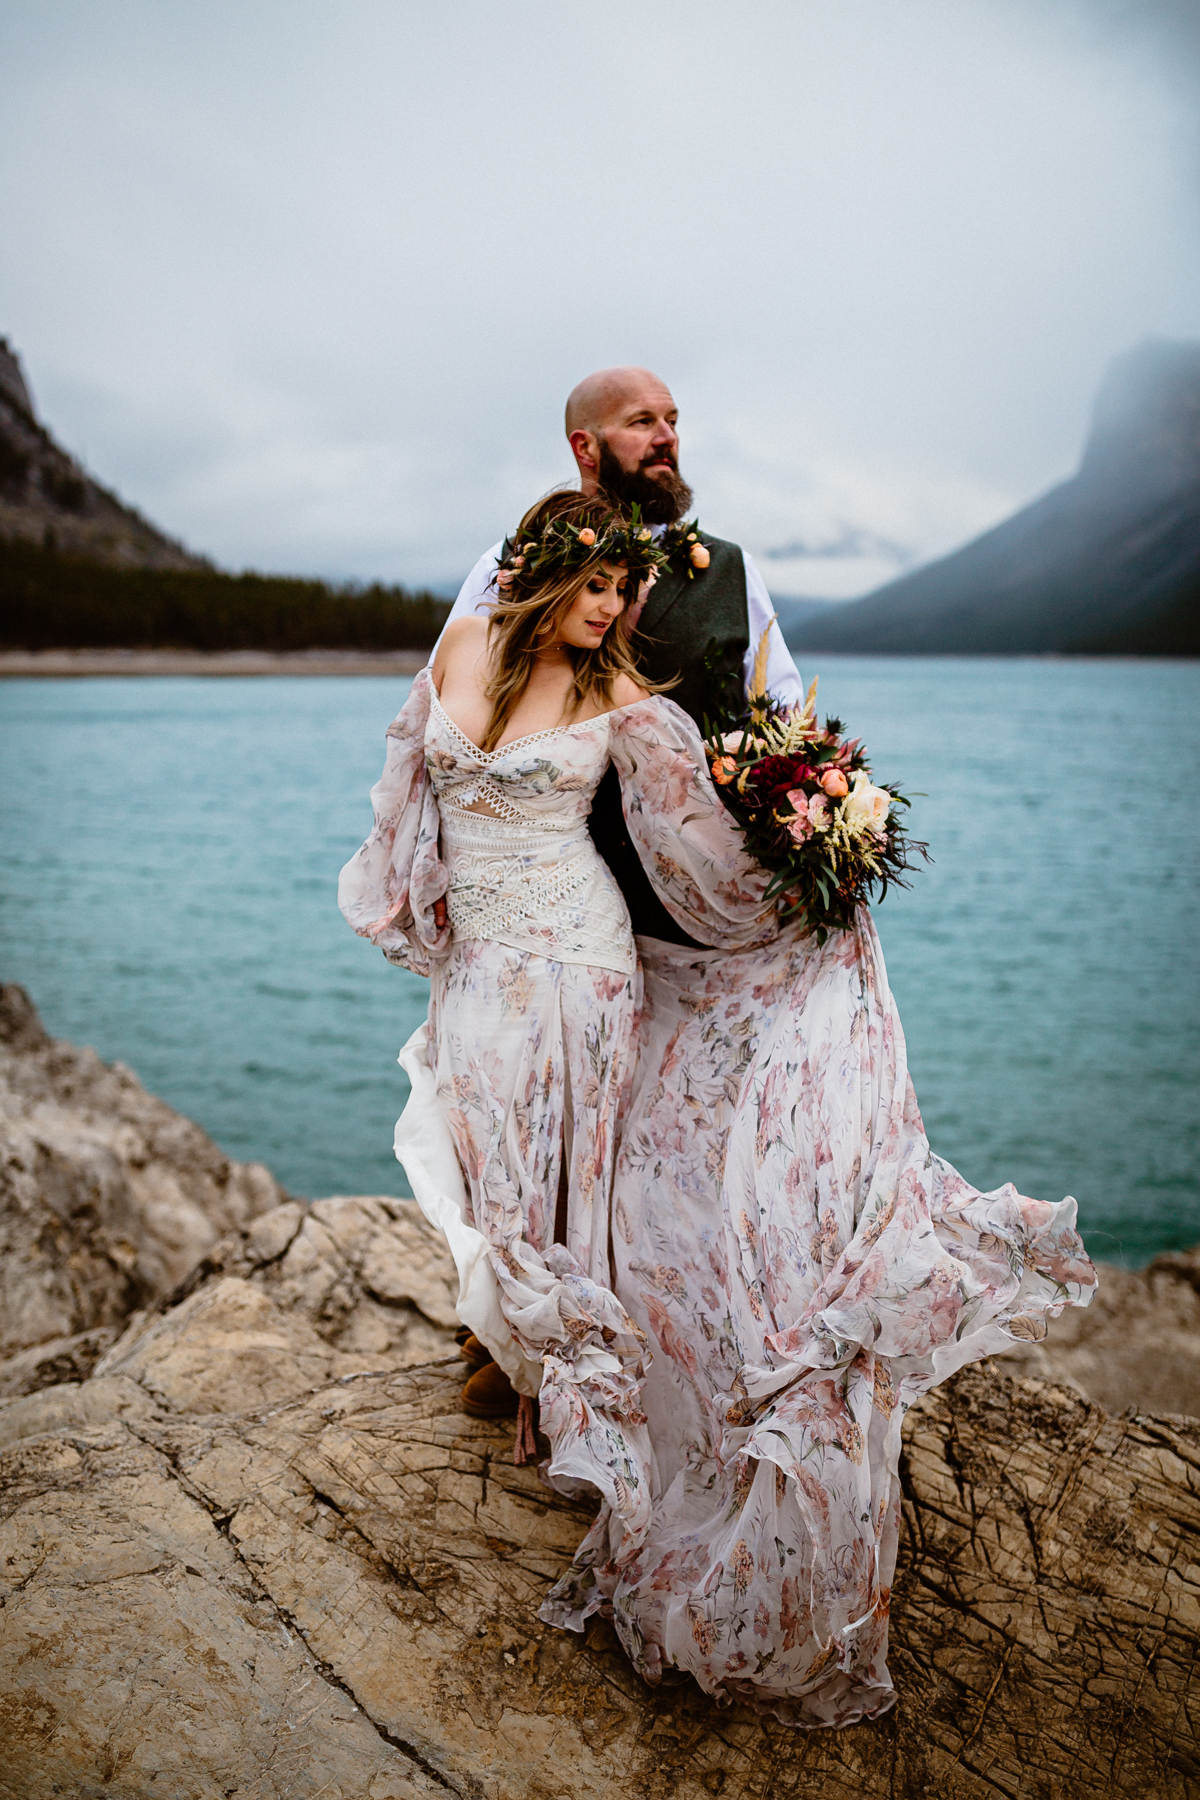 Stormy and Rainy Banff Wedding Photography - Photo 38